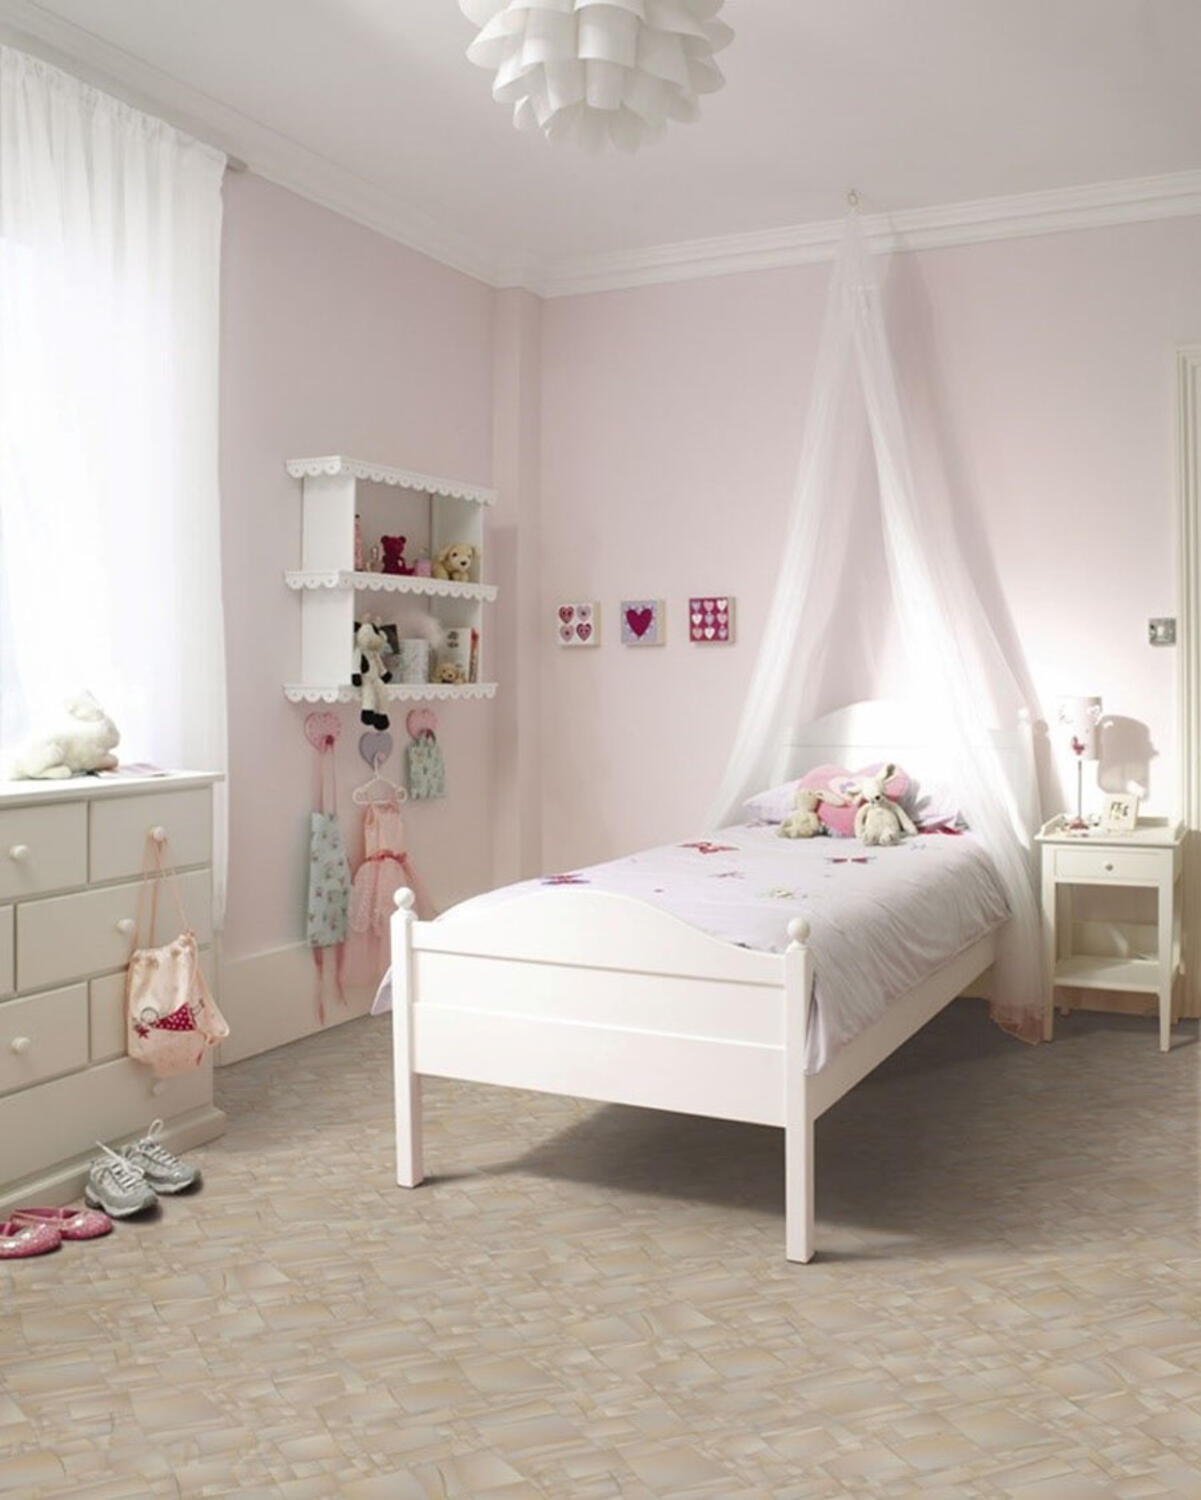 Camera de fetita amenajata cu mobila alba si pereti roz pal